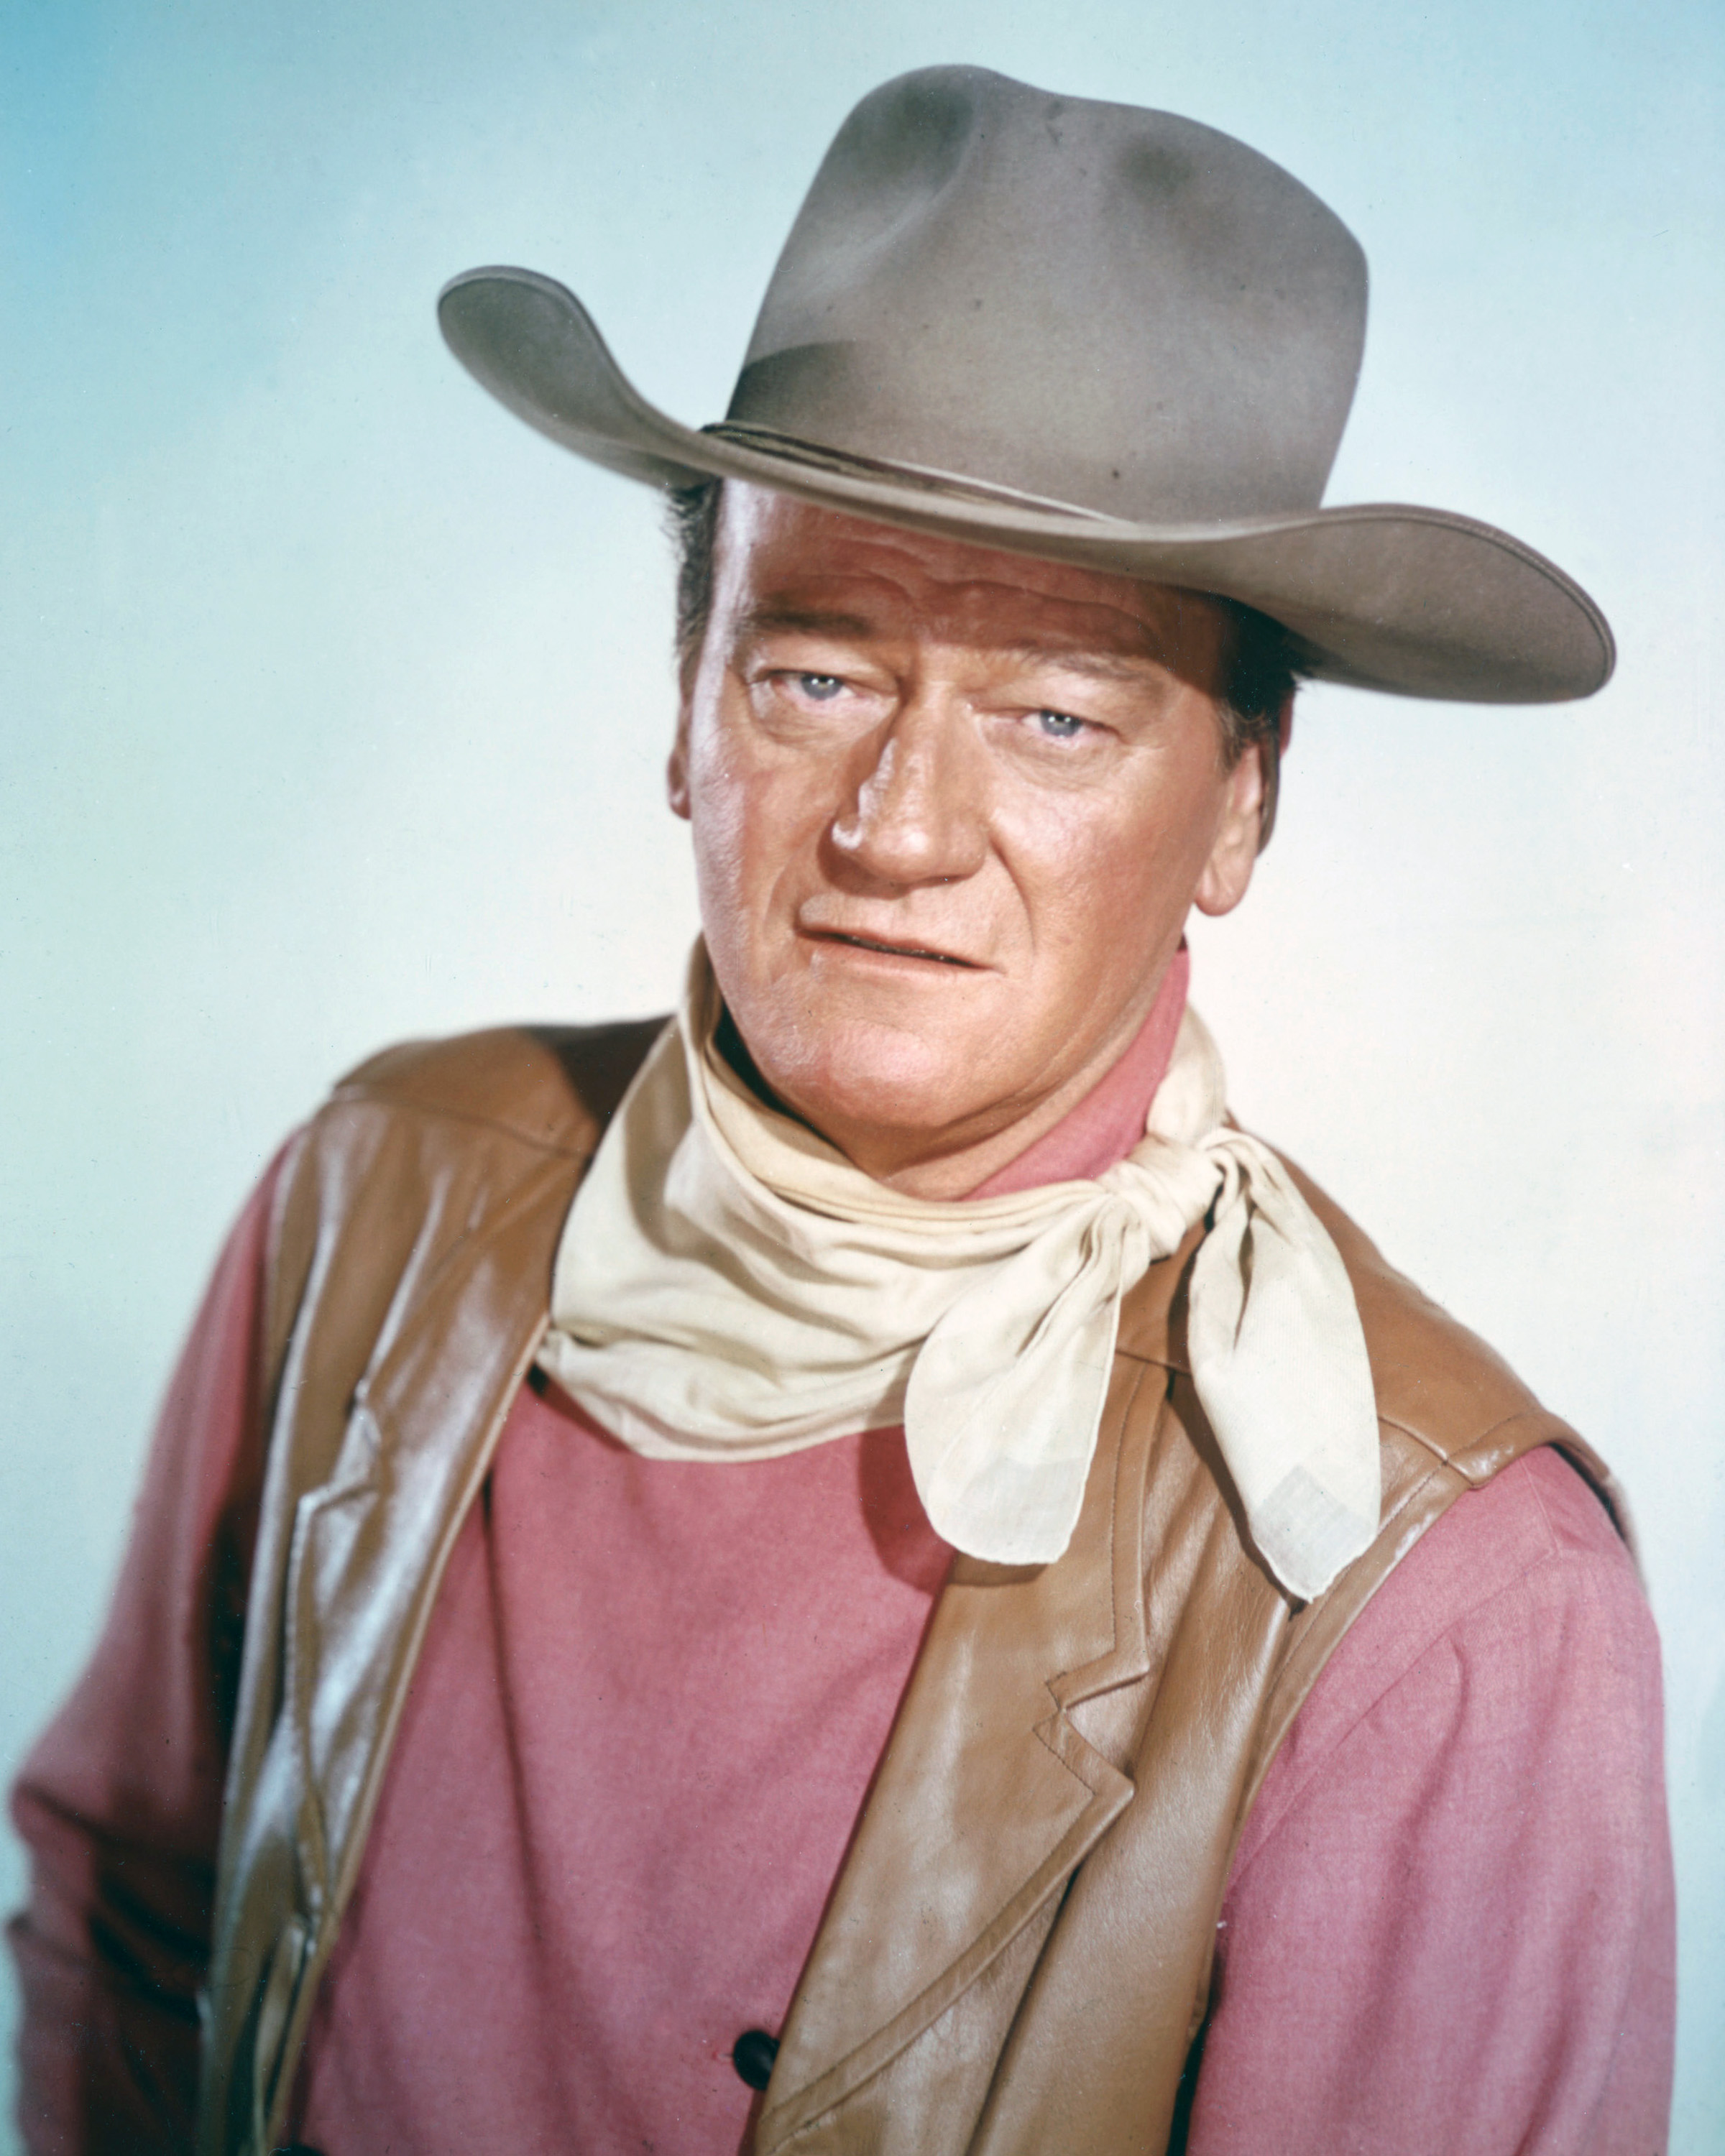 John Wayne in a studio portrait, circa 1970. | Source: Getty Images